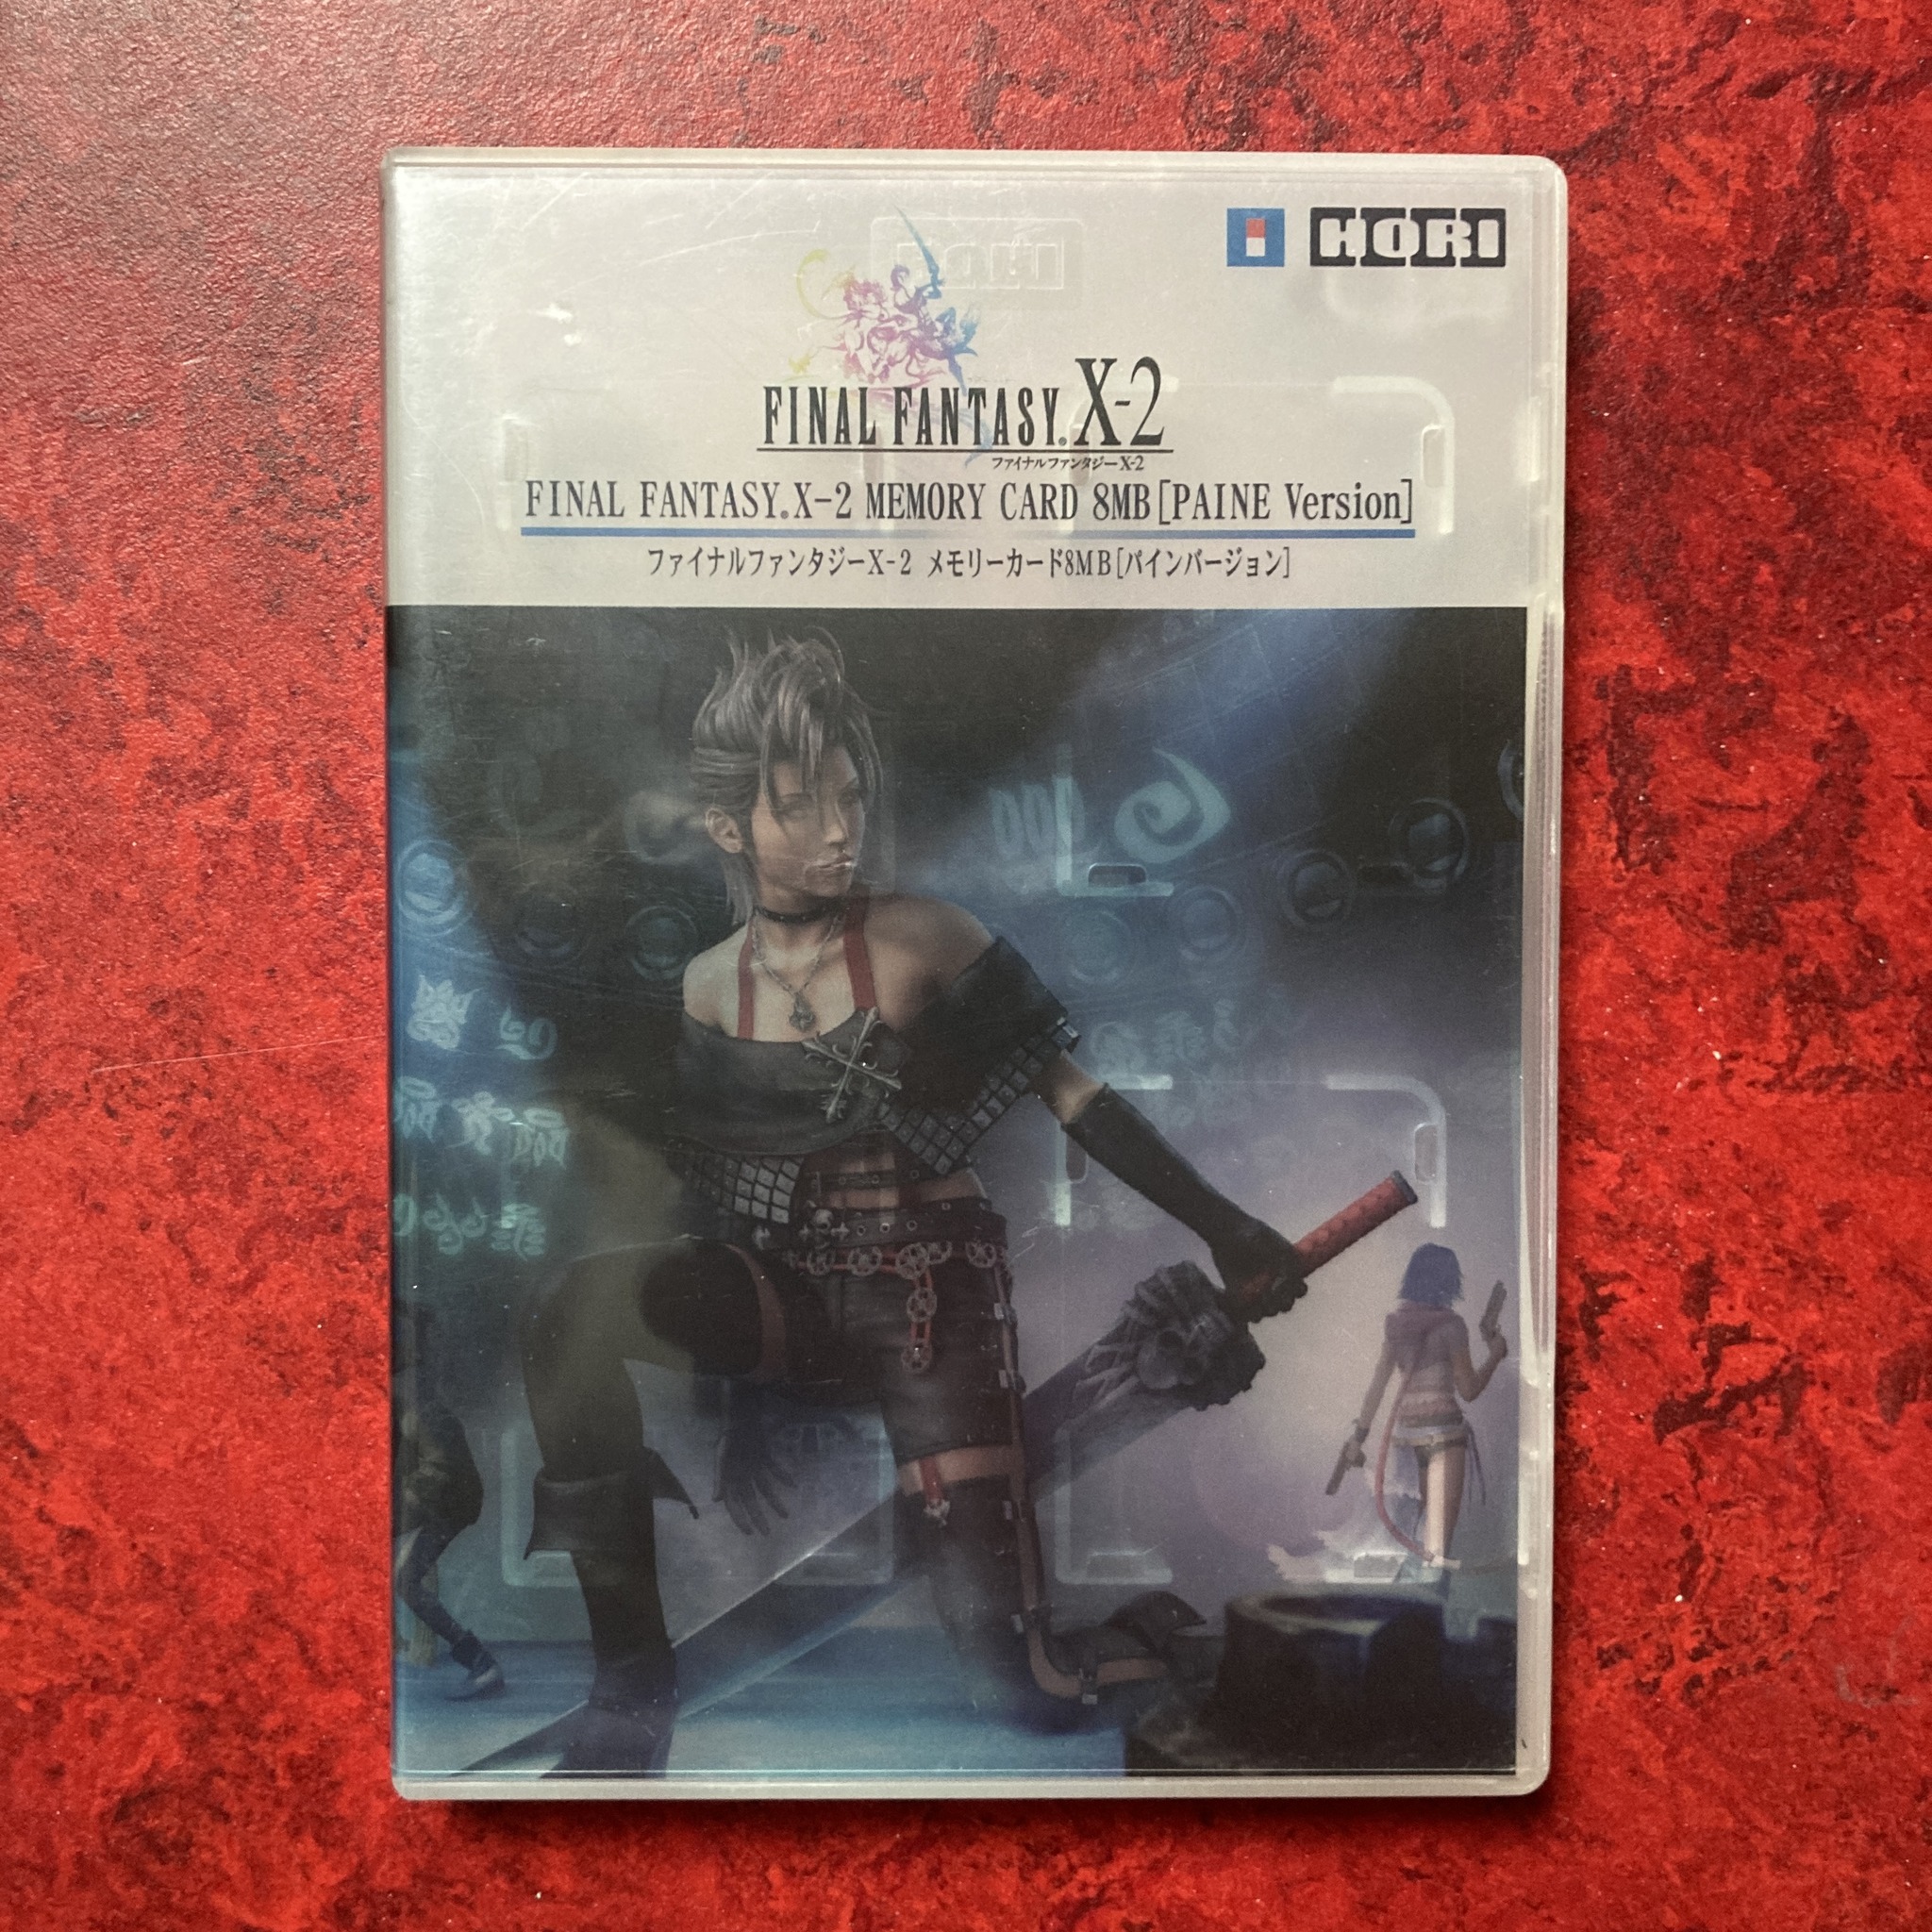 Final Fantasy X-2 International + Last Mission (PS2)